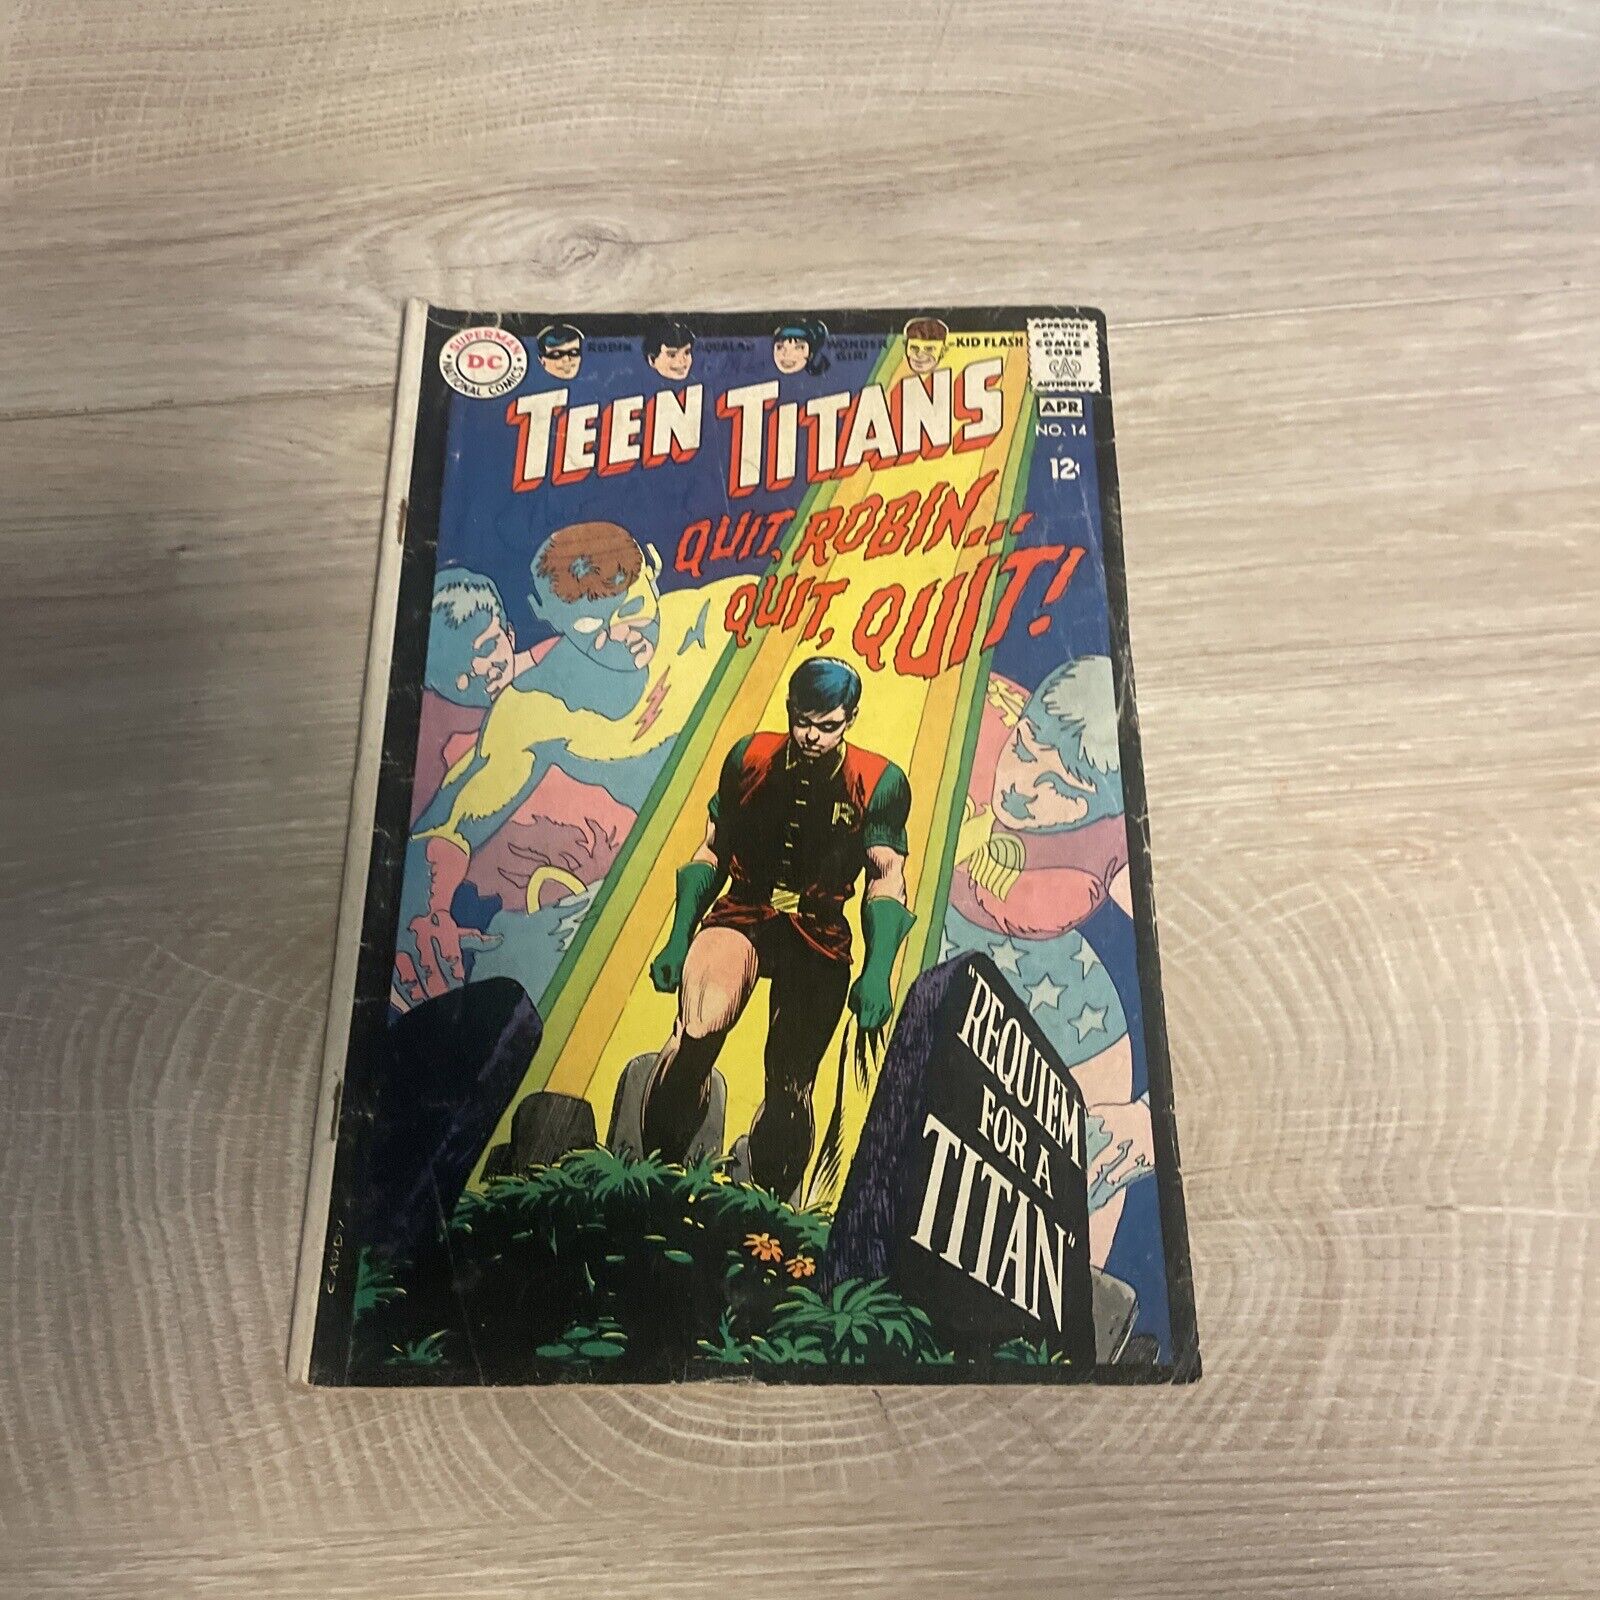 Teen Titans 1966 Silver Age DC # 14 Requiem for a Titan Quit Robin Quit